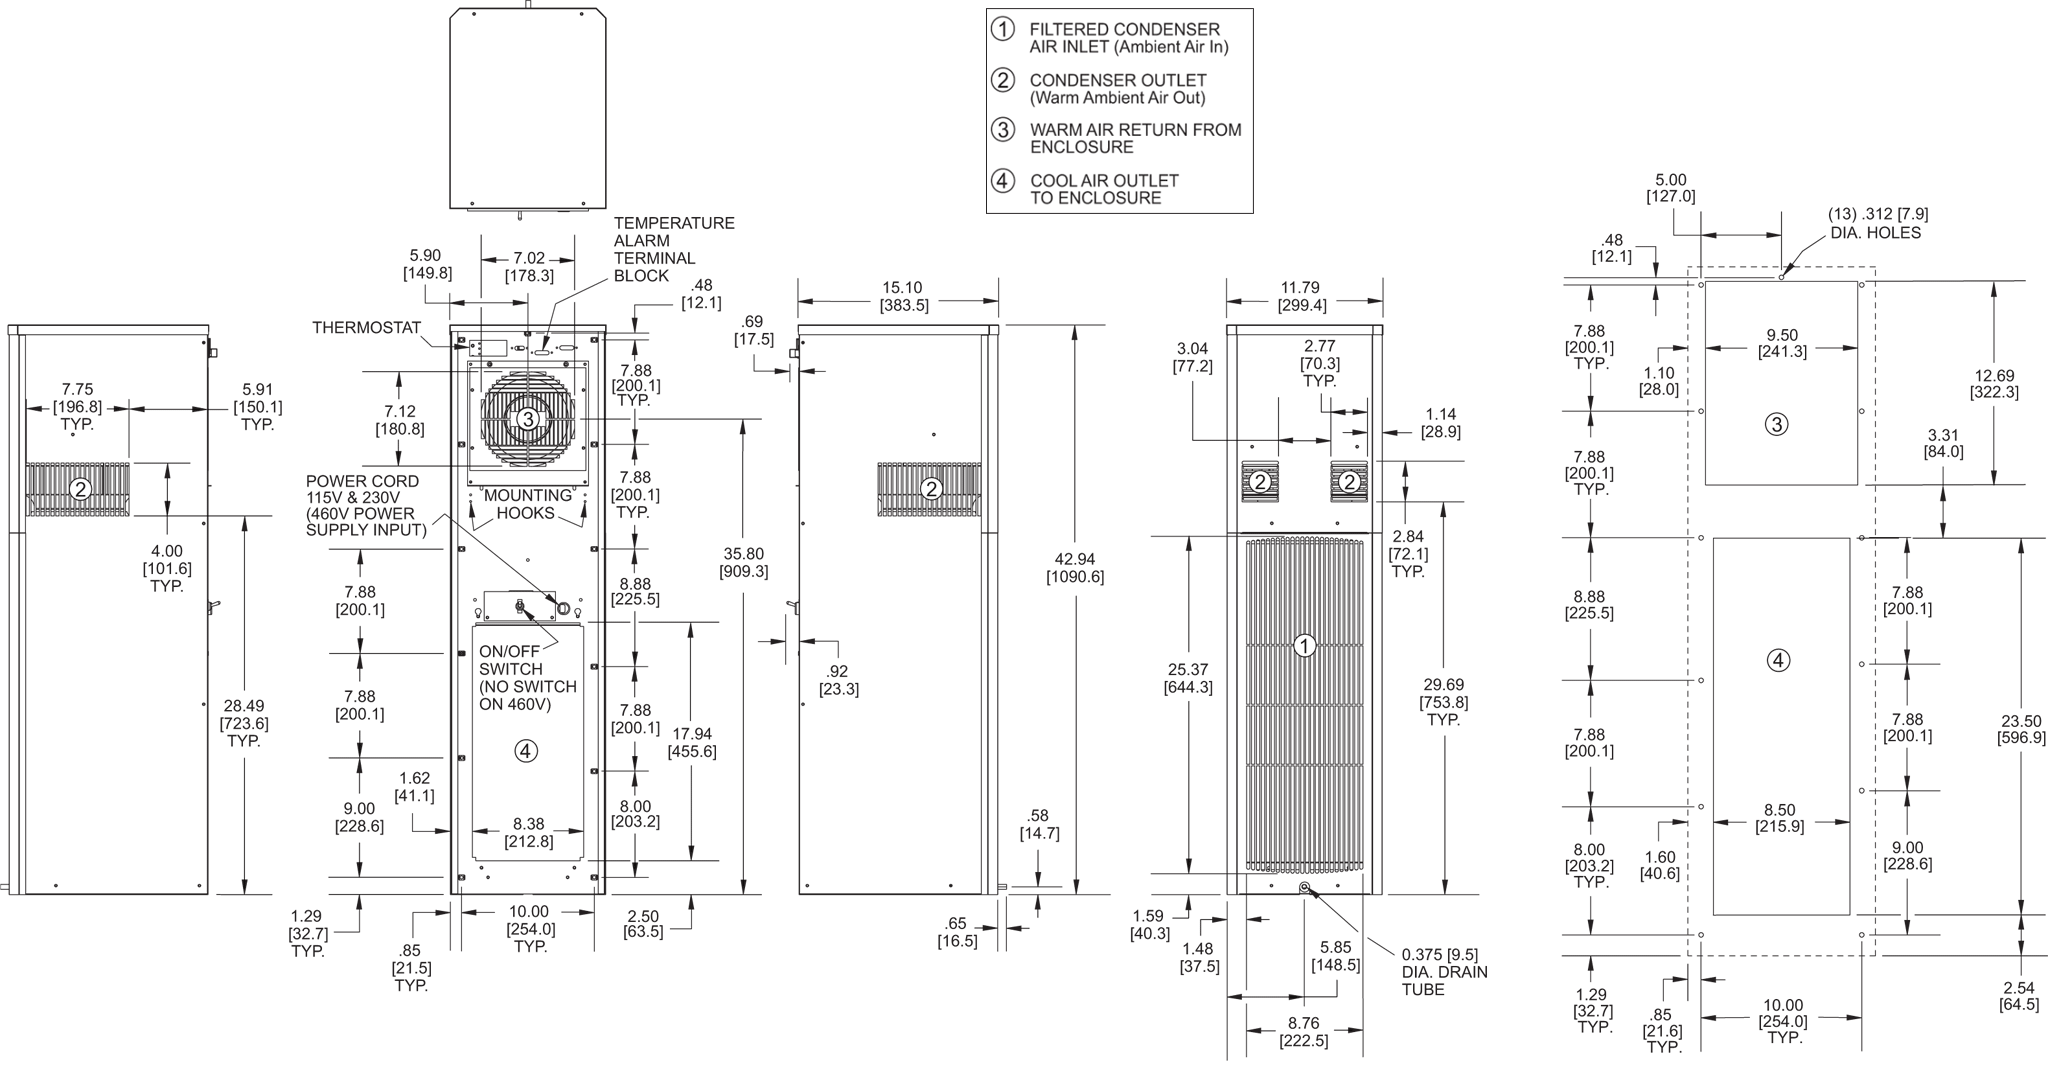 SlimKool SP43 general arrangement drawing